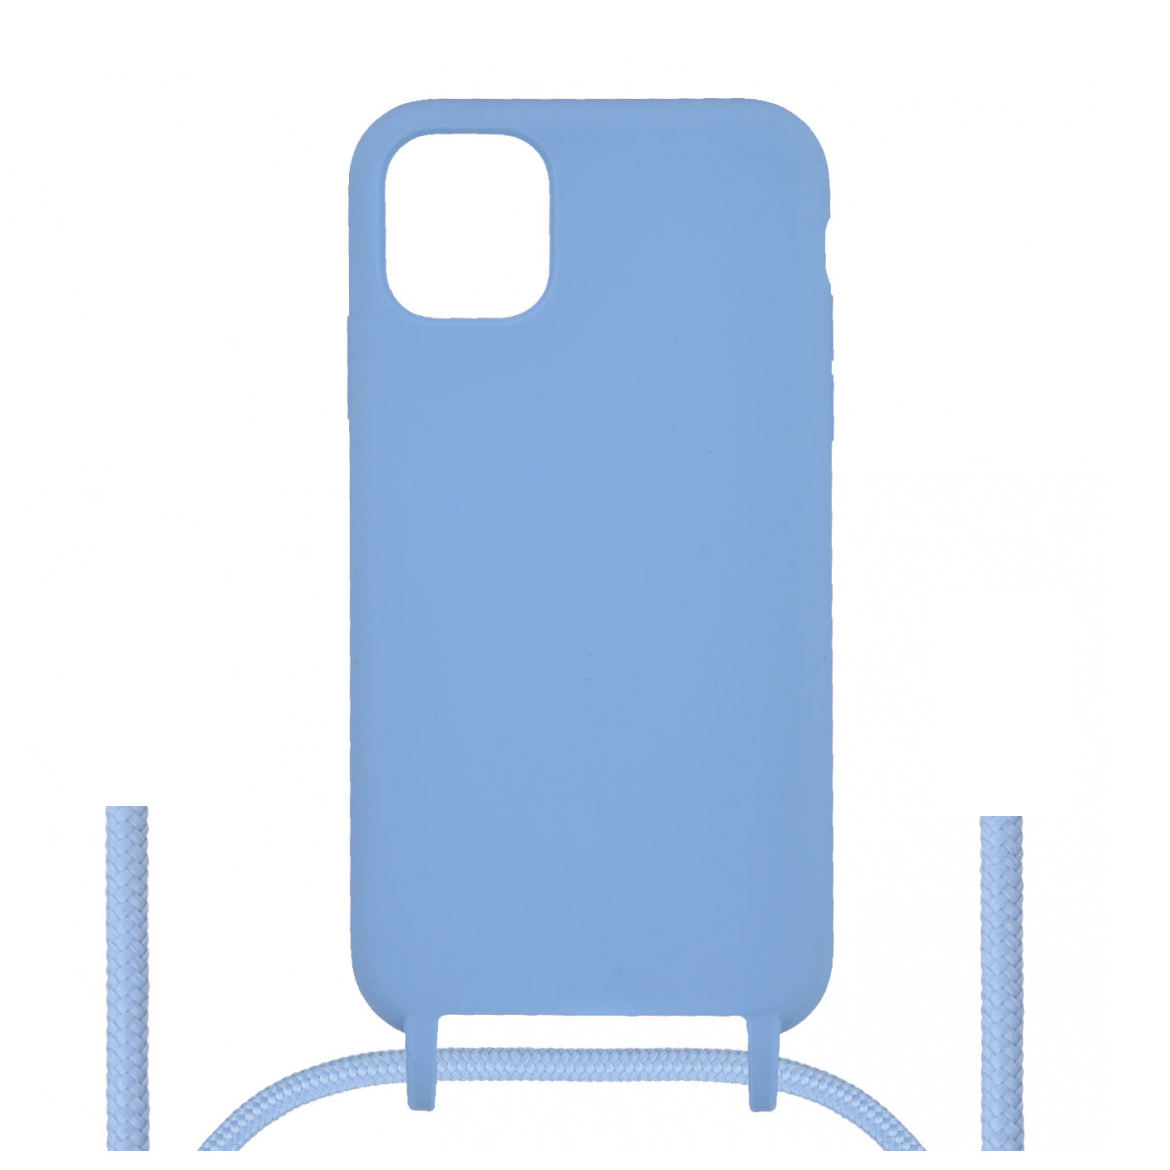 Funda para iPhone 11 con Cuerda, iPhone 11 Carcasa Transparente